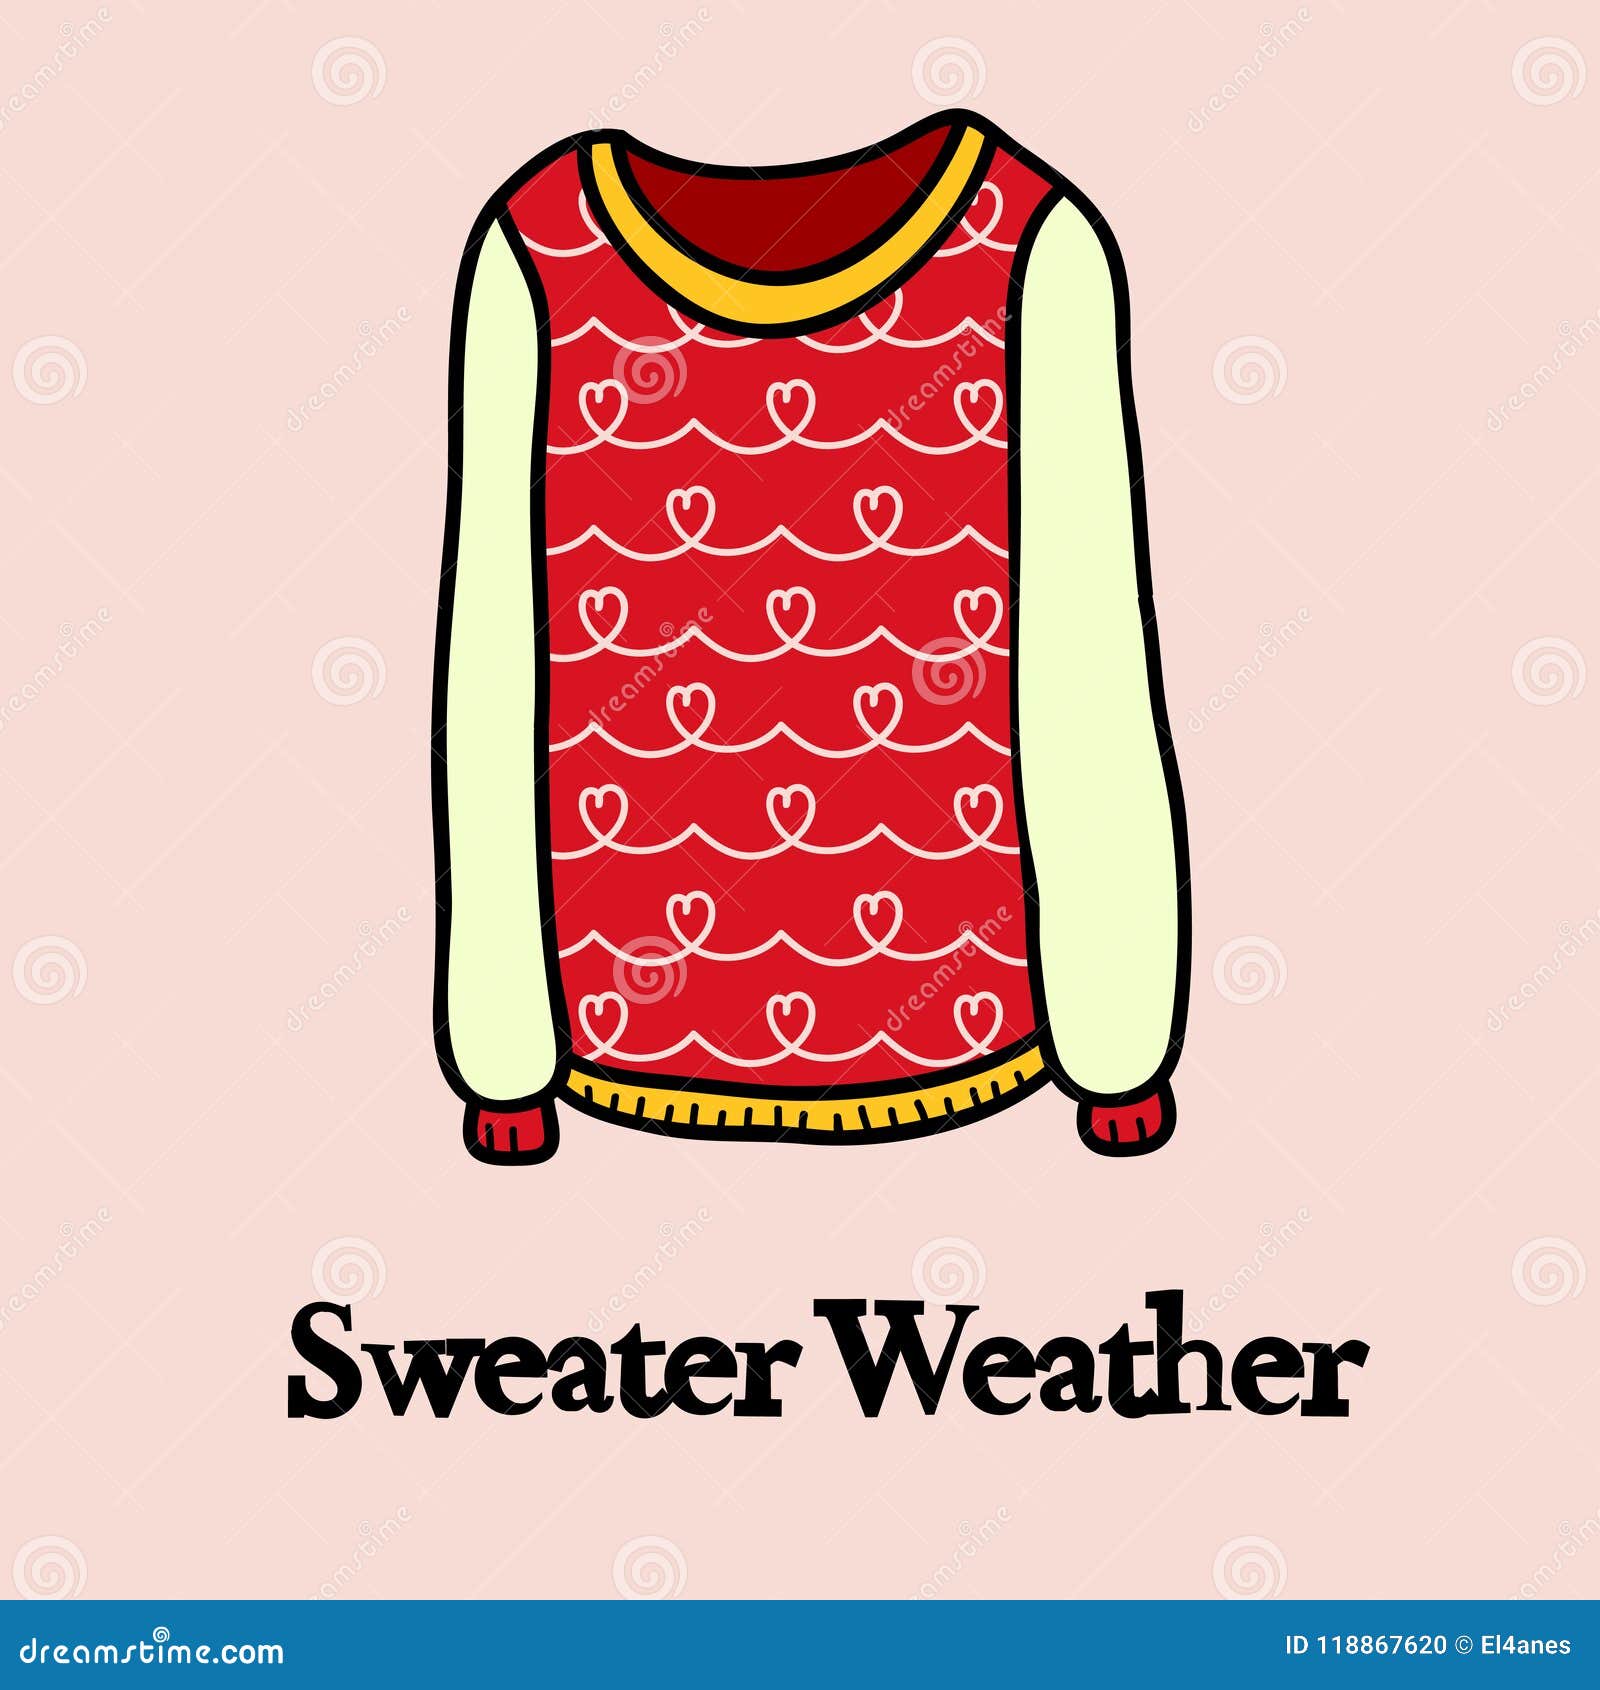 Sweater Weather. Cartoon Vector Illustration Stock Vector ...